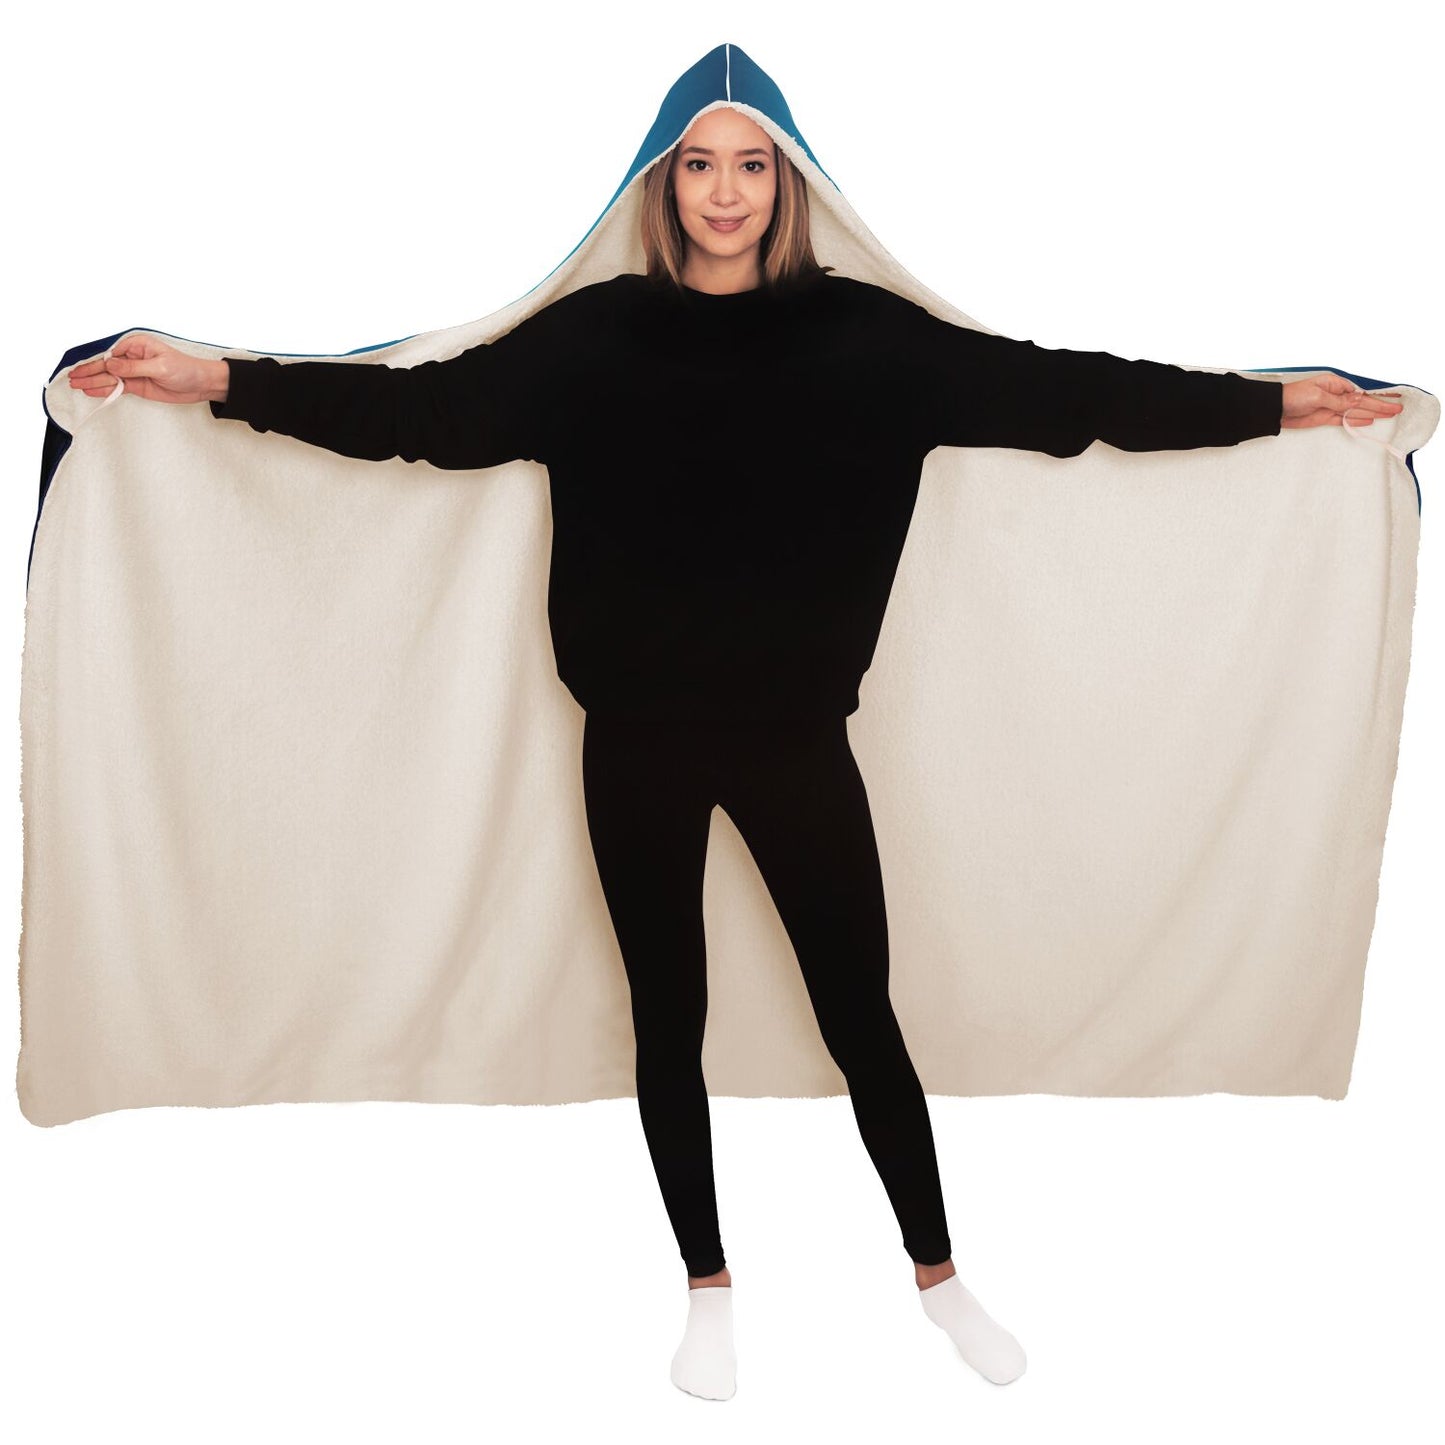 Halloween Hooded Blanket, Mystical Pumpkin Halloween Blanket